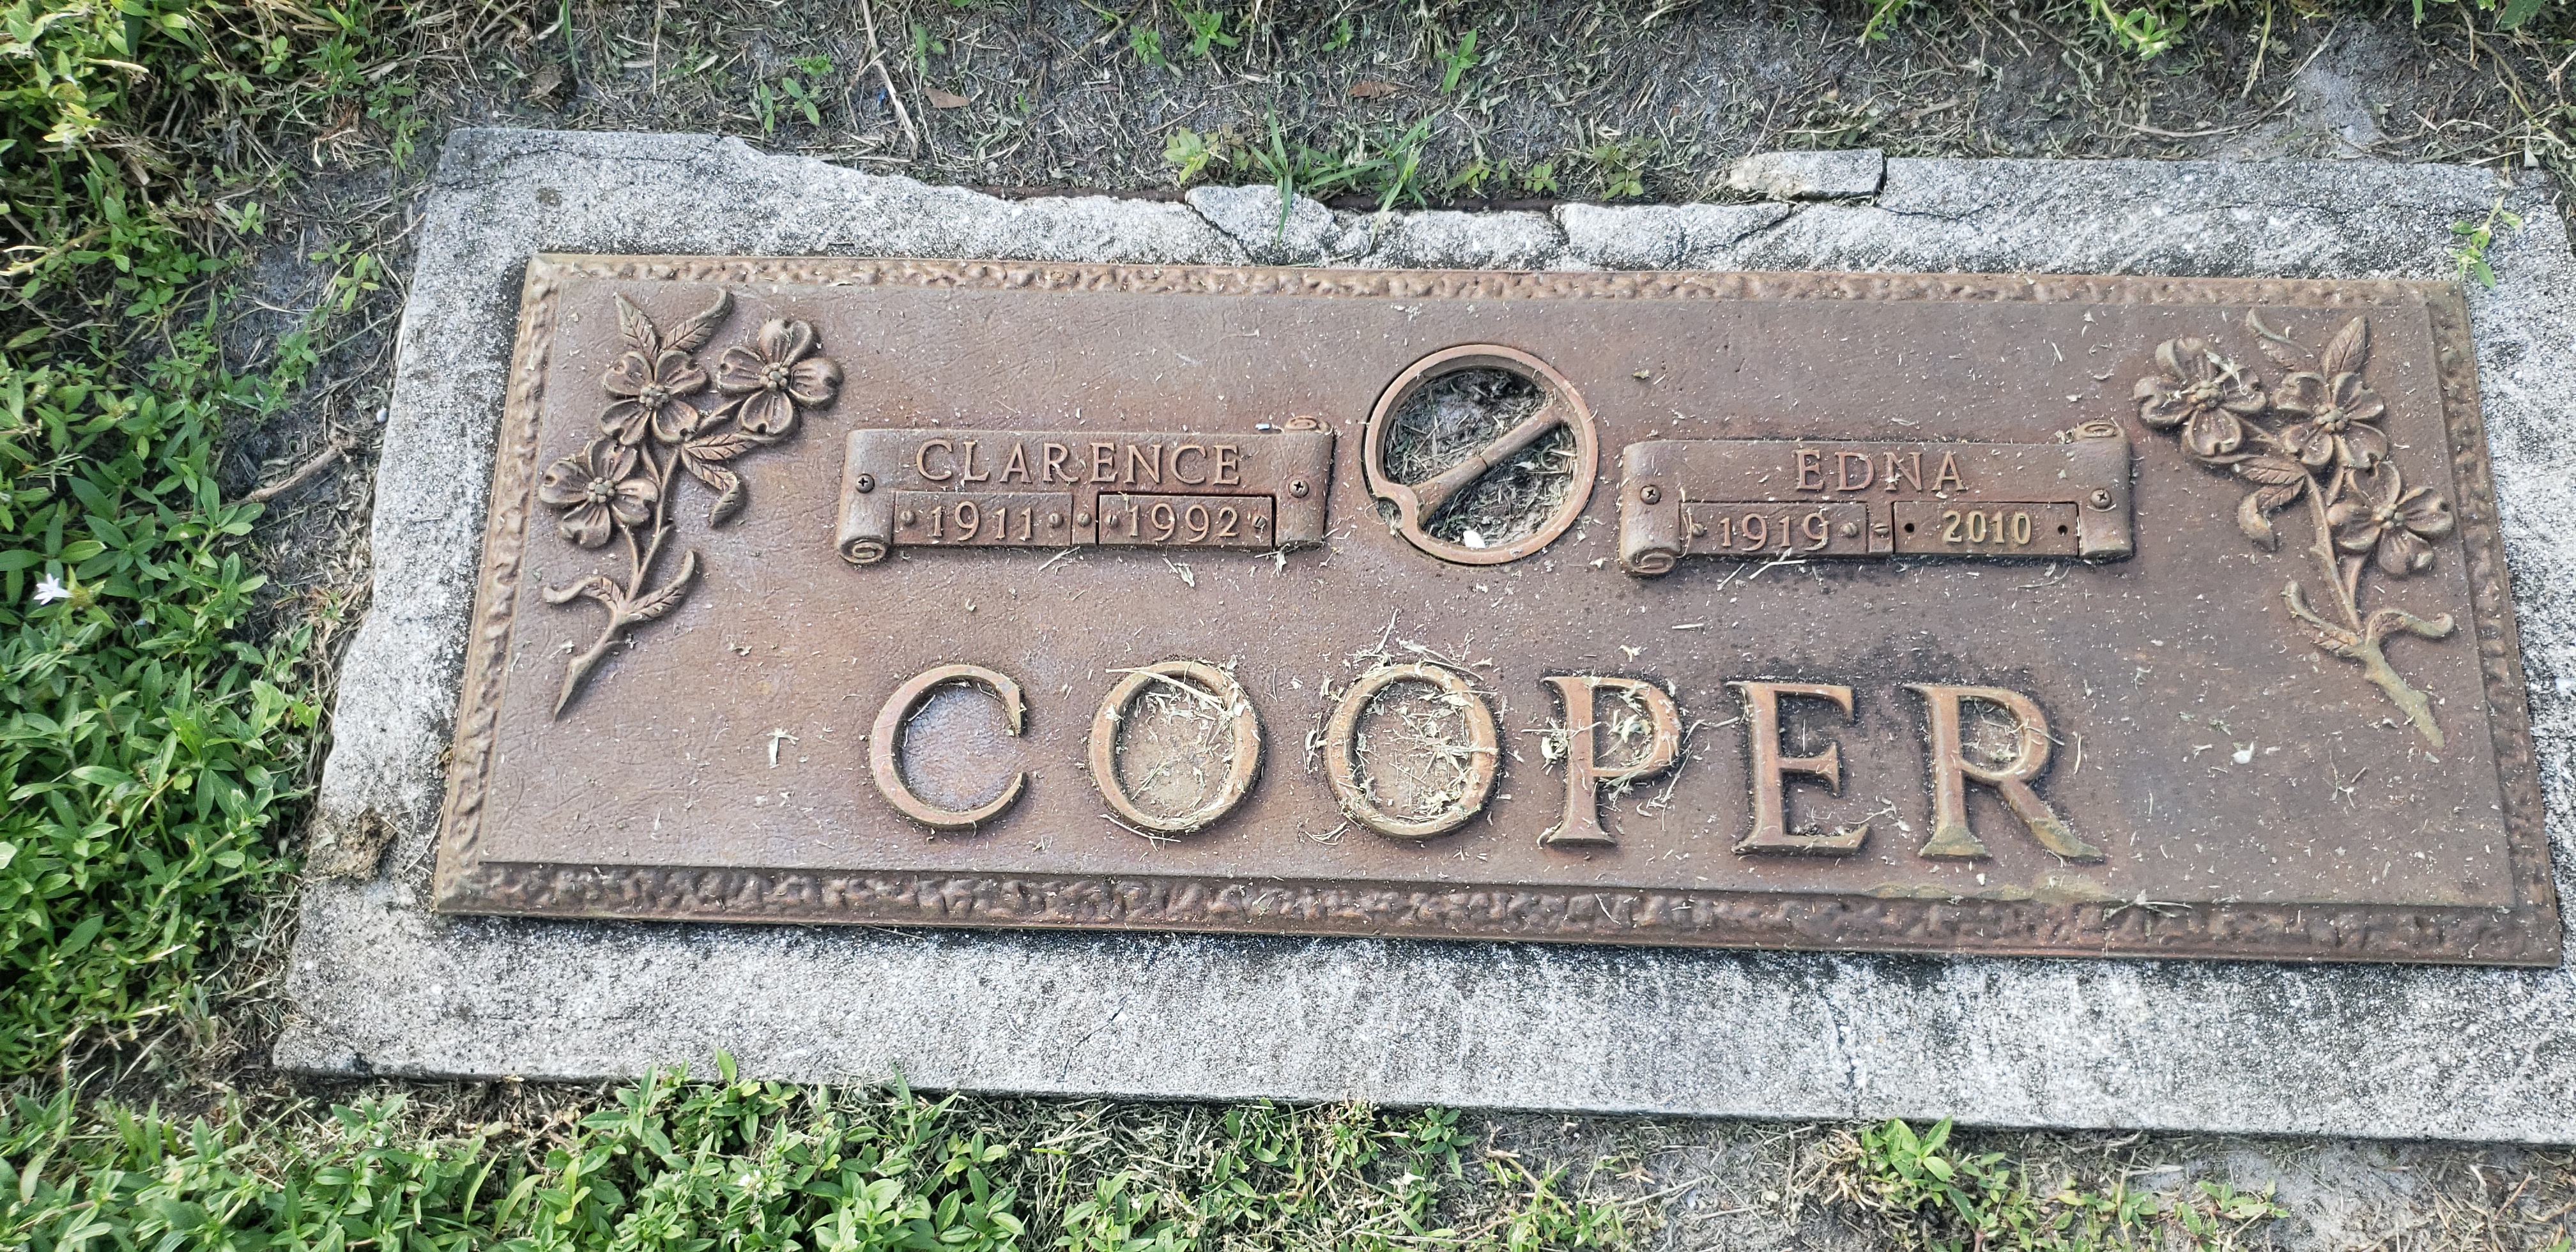 Edna Cooper